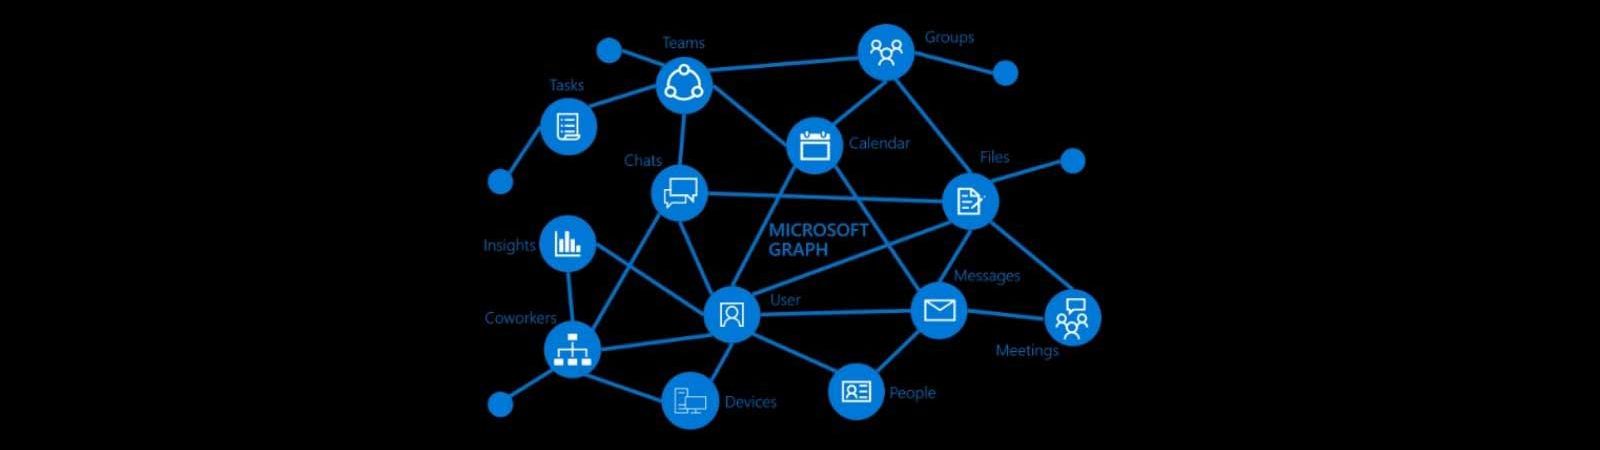 Reimagining work with the Microsoft 365 platform